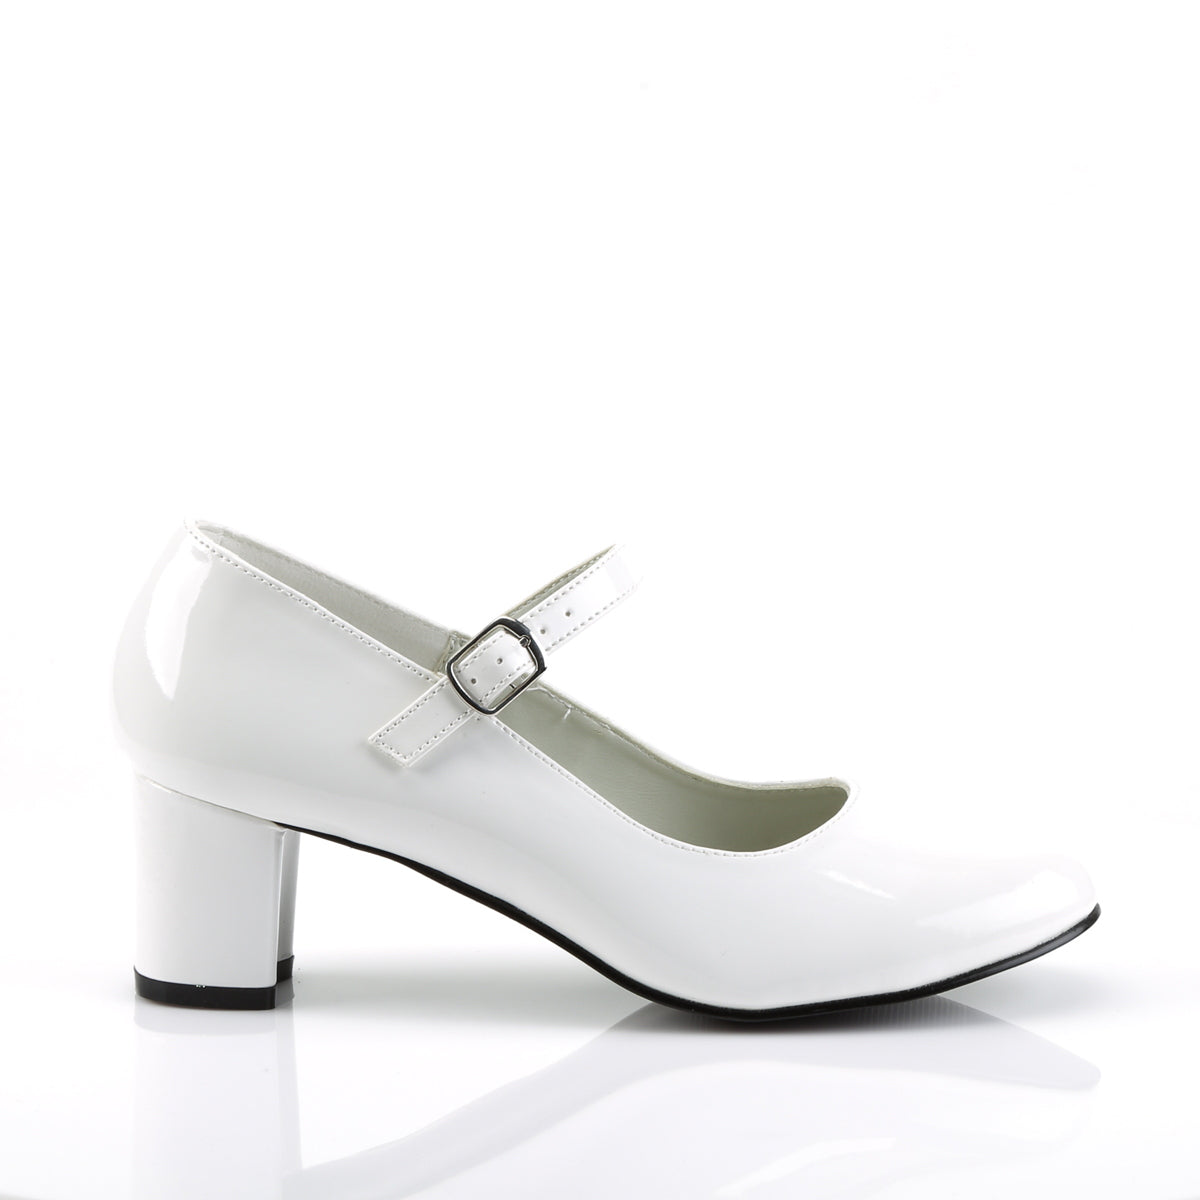 SCHOOLGIRL-50 Funtasma Fantasy White Patent Women's Shoes [Fancy Dress Costume Shoes]